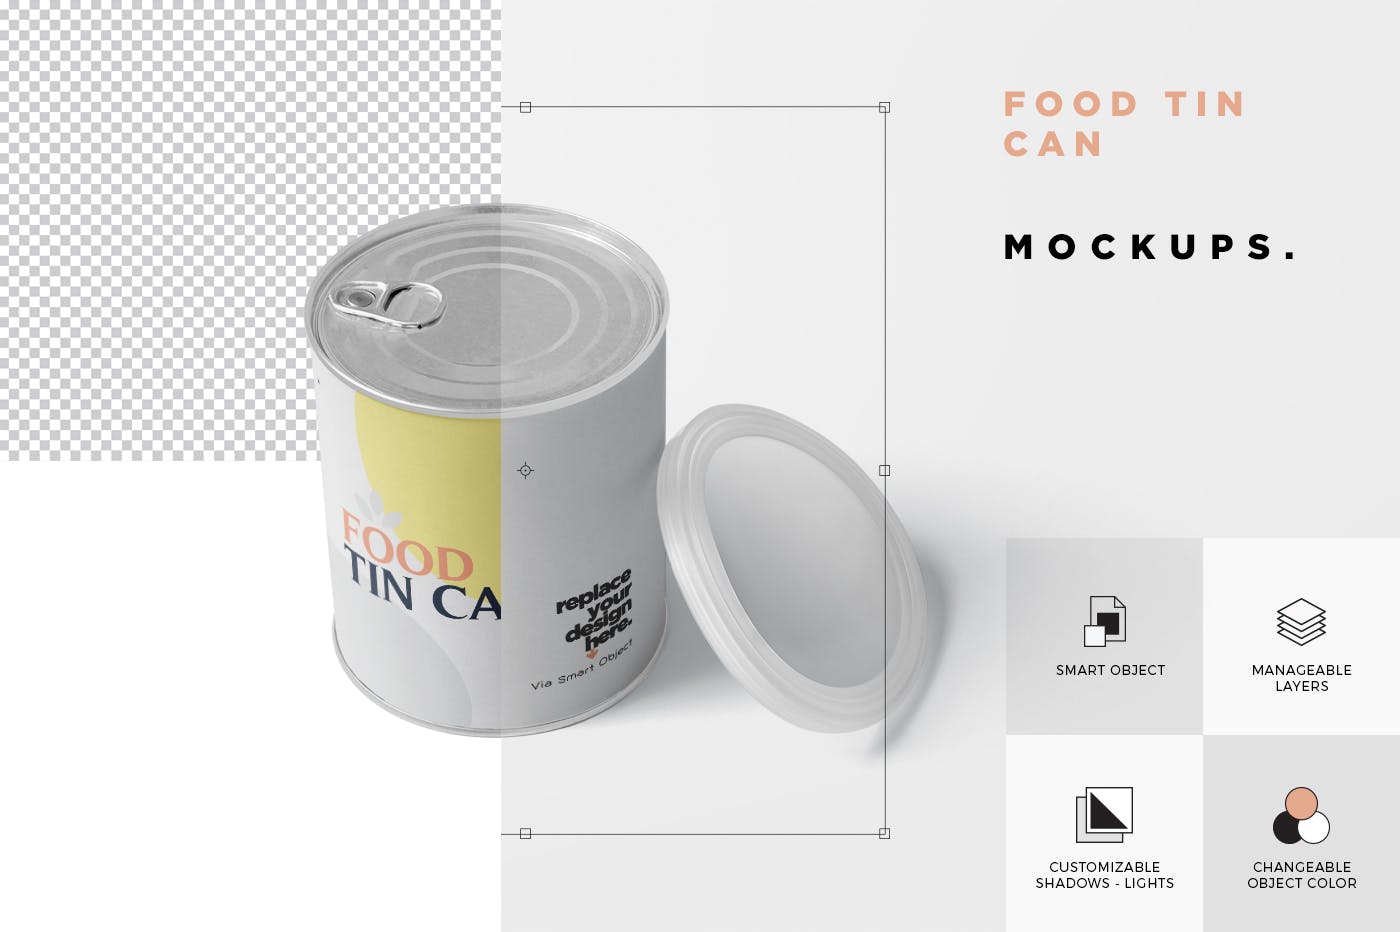 中型食物罐头外观设计样机模板 Food Tin Can Mockup Medium Size – Round插图(5)